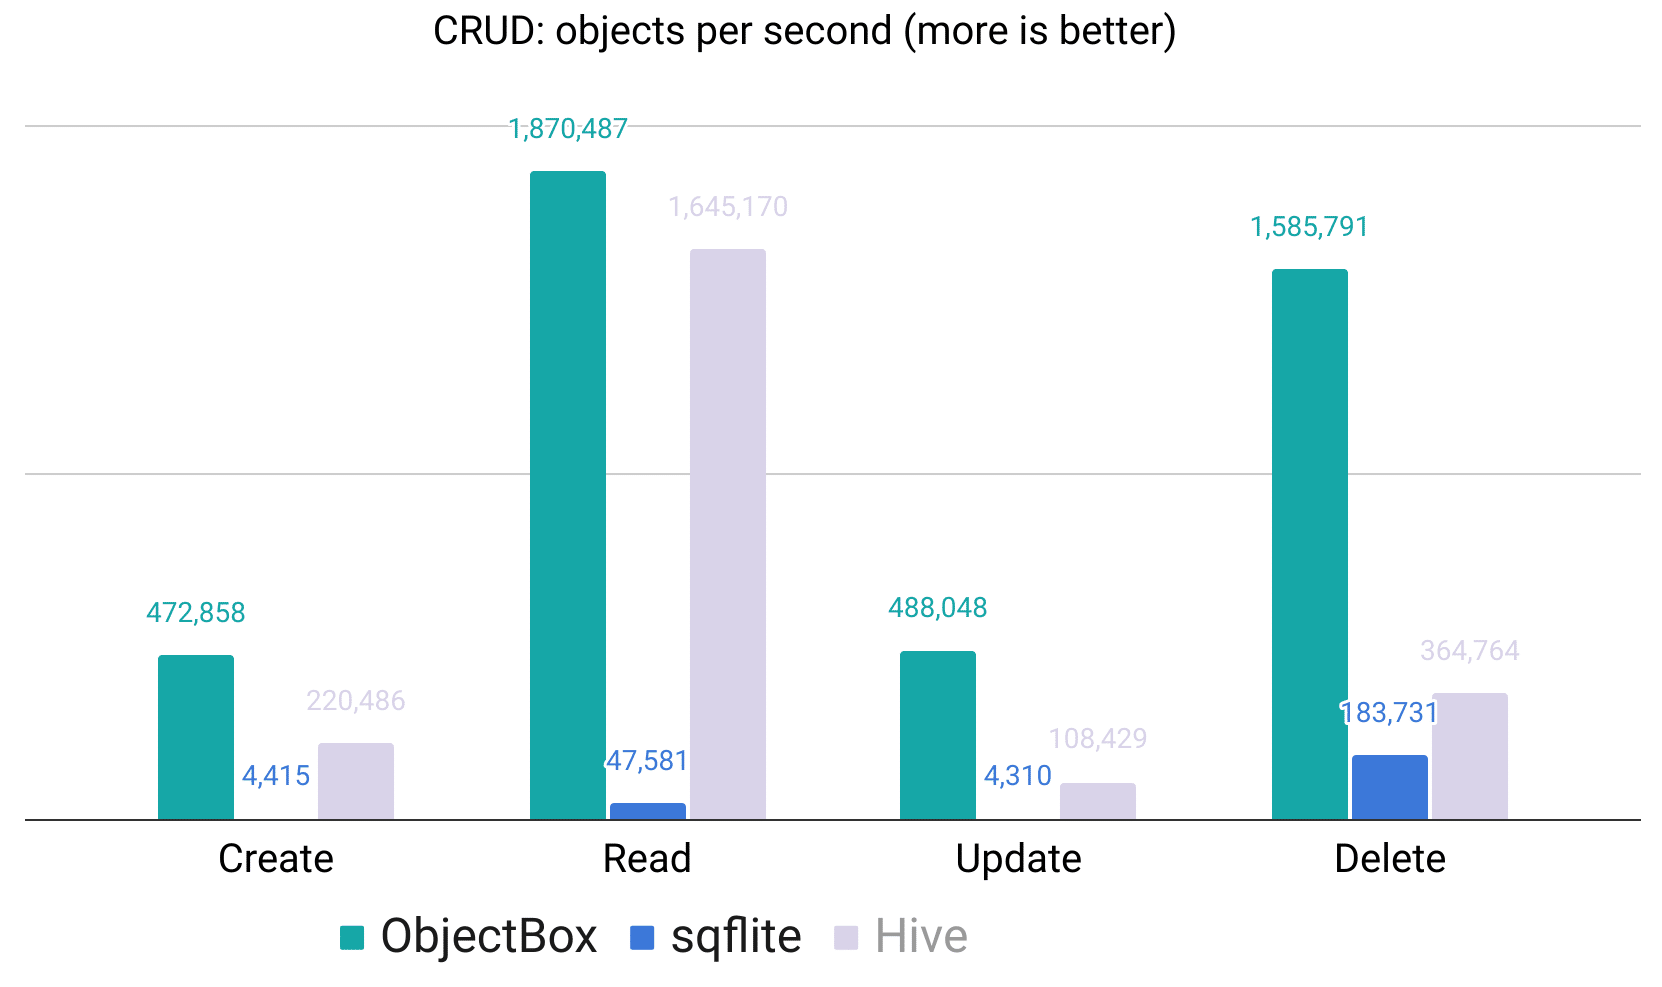 ObjectBox, sqflite, Hive performance comparison across CRUD